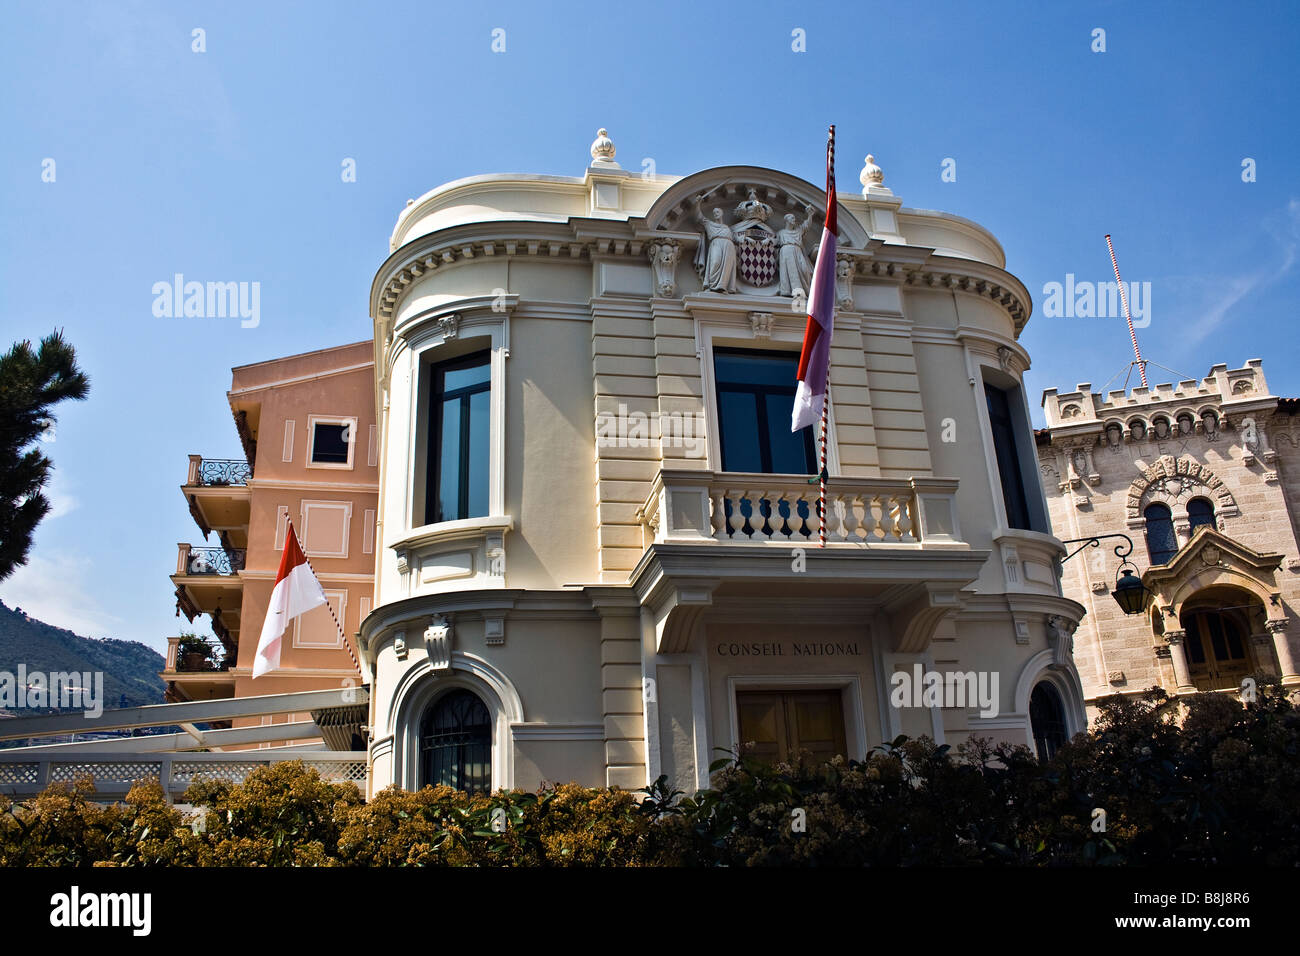 Monaco, Conseil national de la Principauté de Monaco Banque D'Images